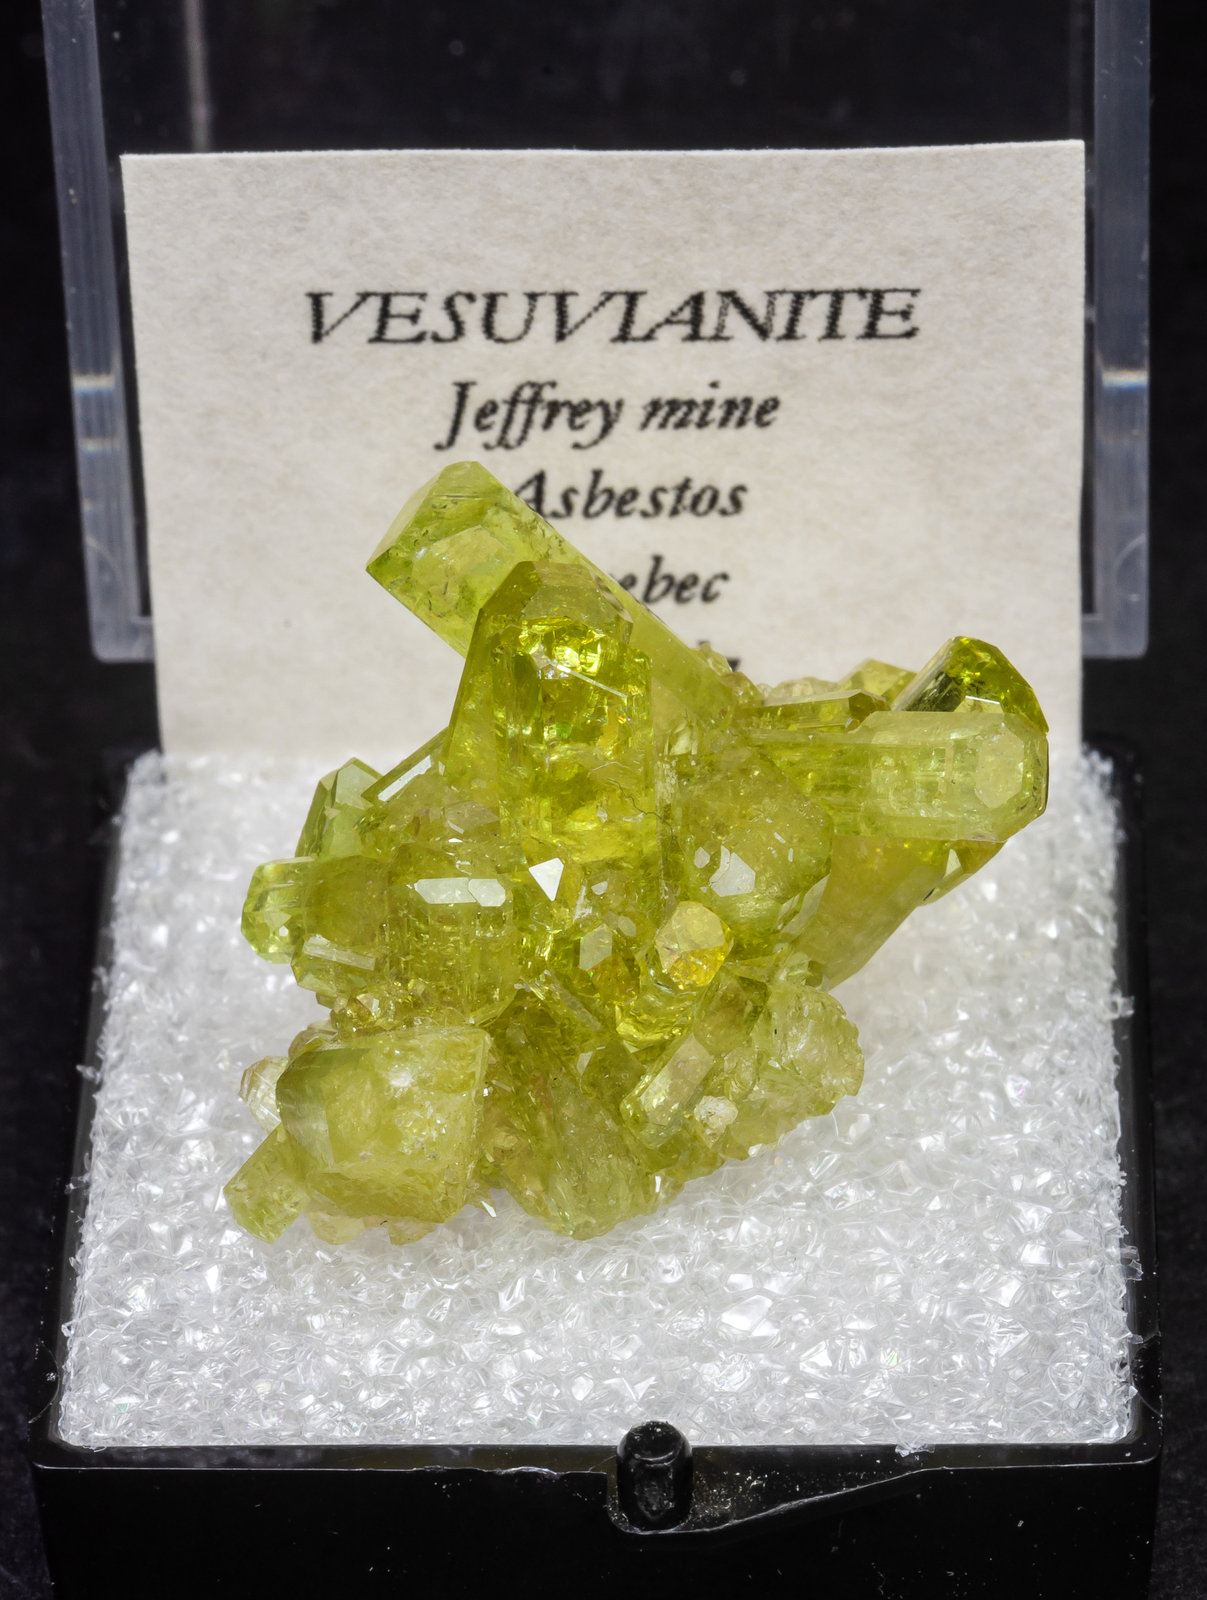 specimens/s_imagesAL8/Vesuvianite-TY86AL8f1.jpg